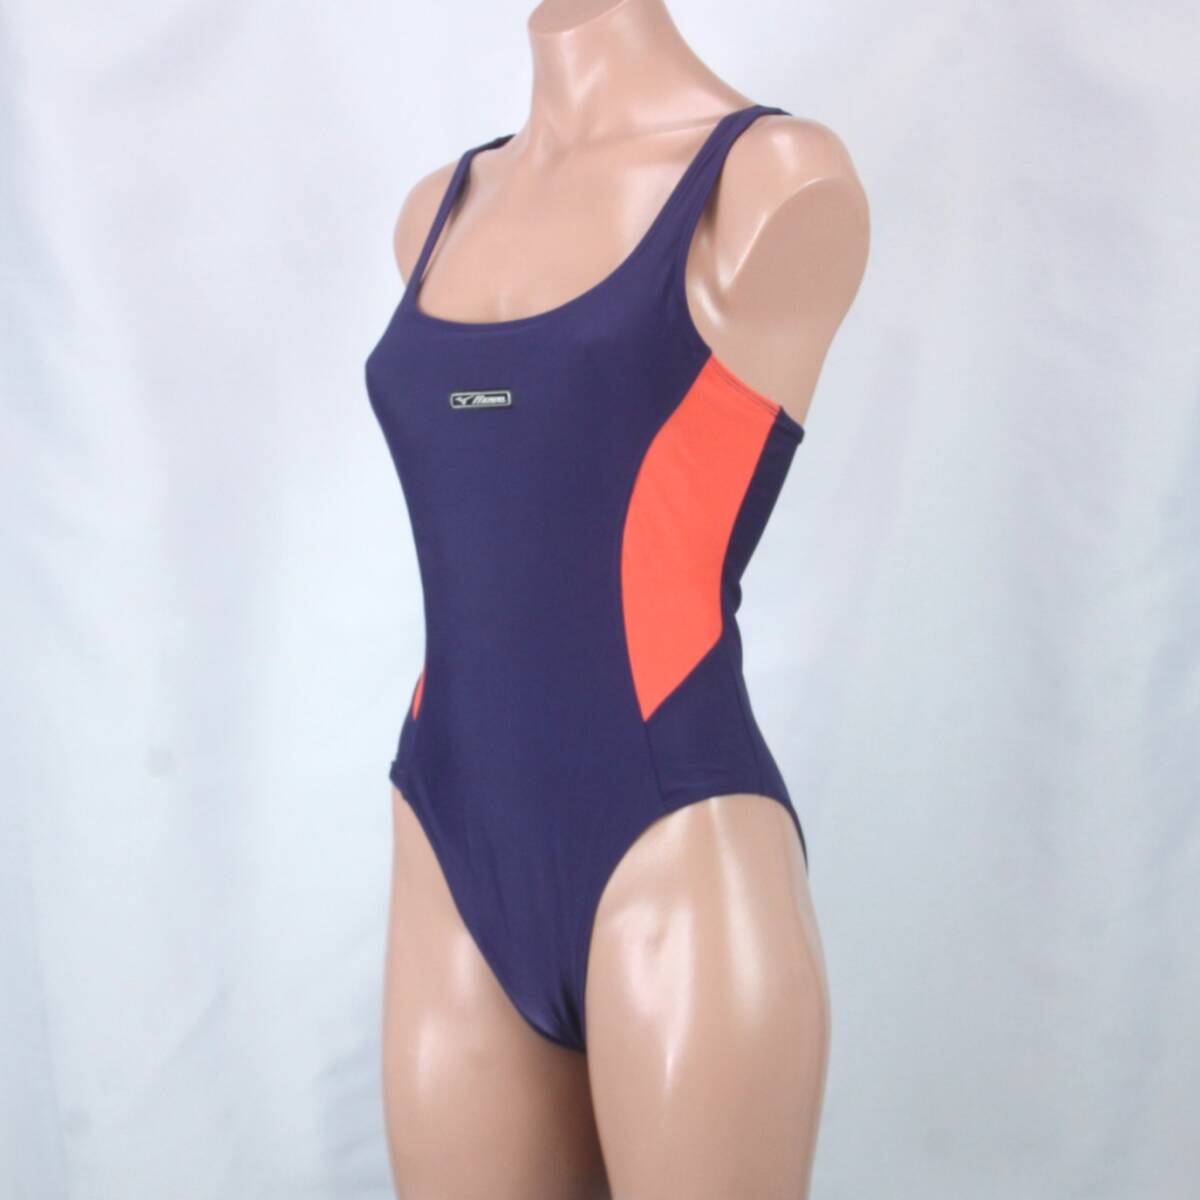 U8264★ミズノ ハイレグ 水着 レディース ワンピース ネイビー 紺色 水泳 競泳 女子 スイムウェア スイミング プールの画像2